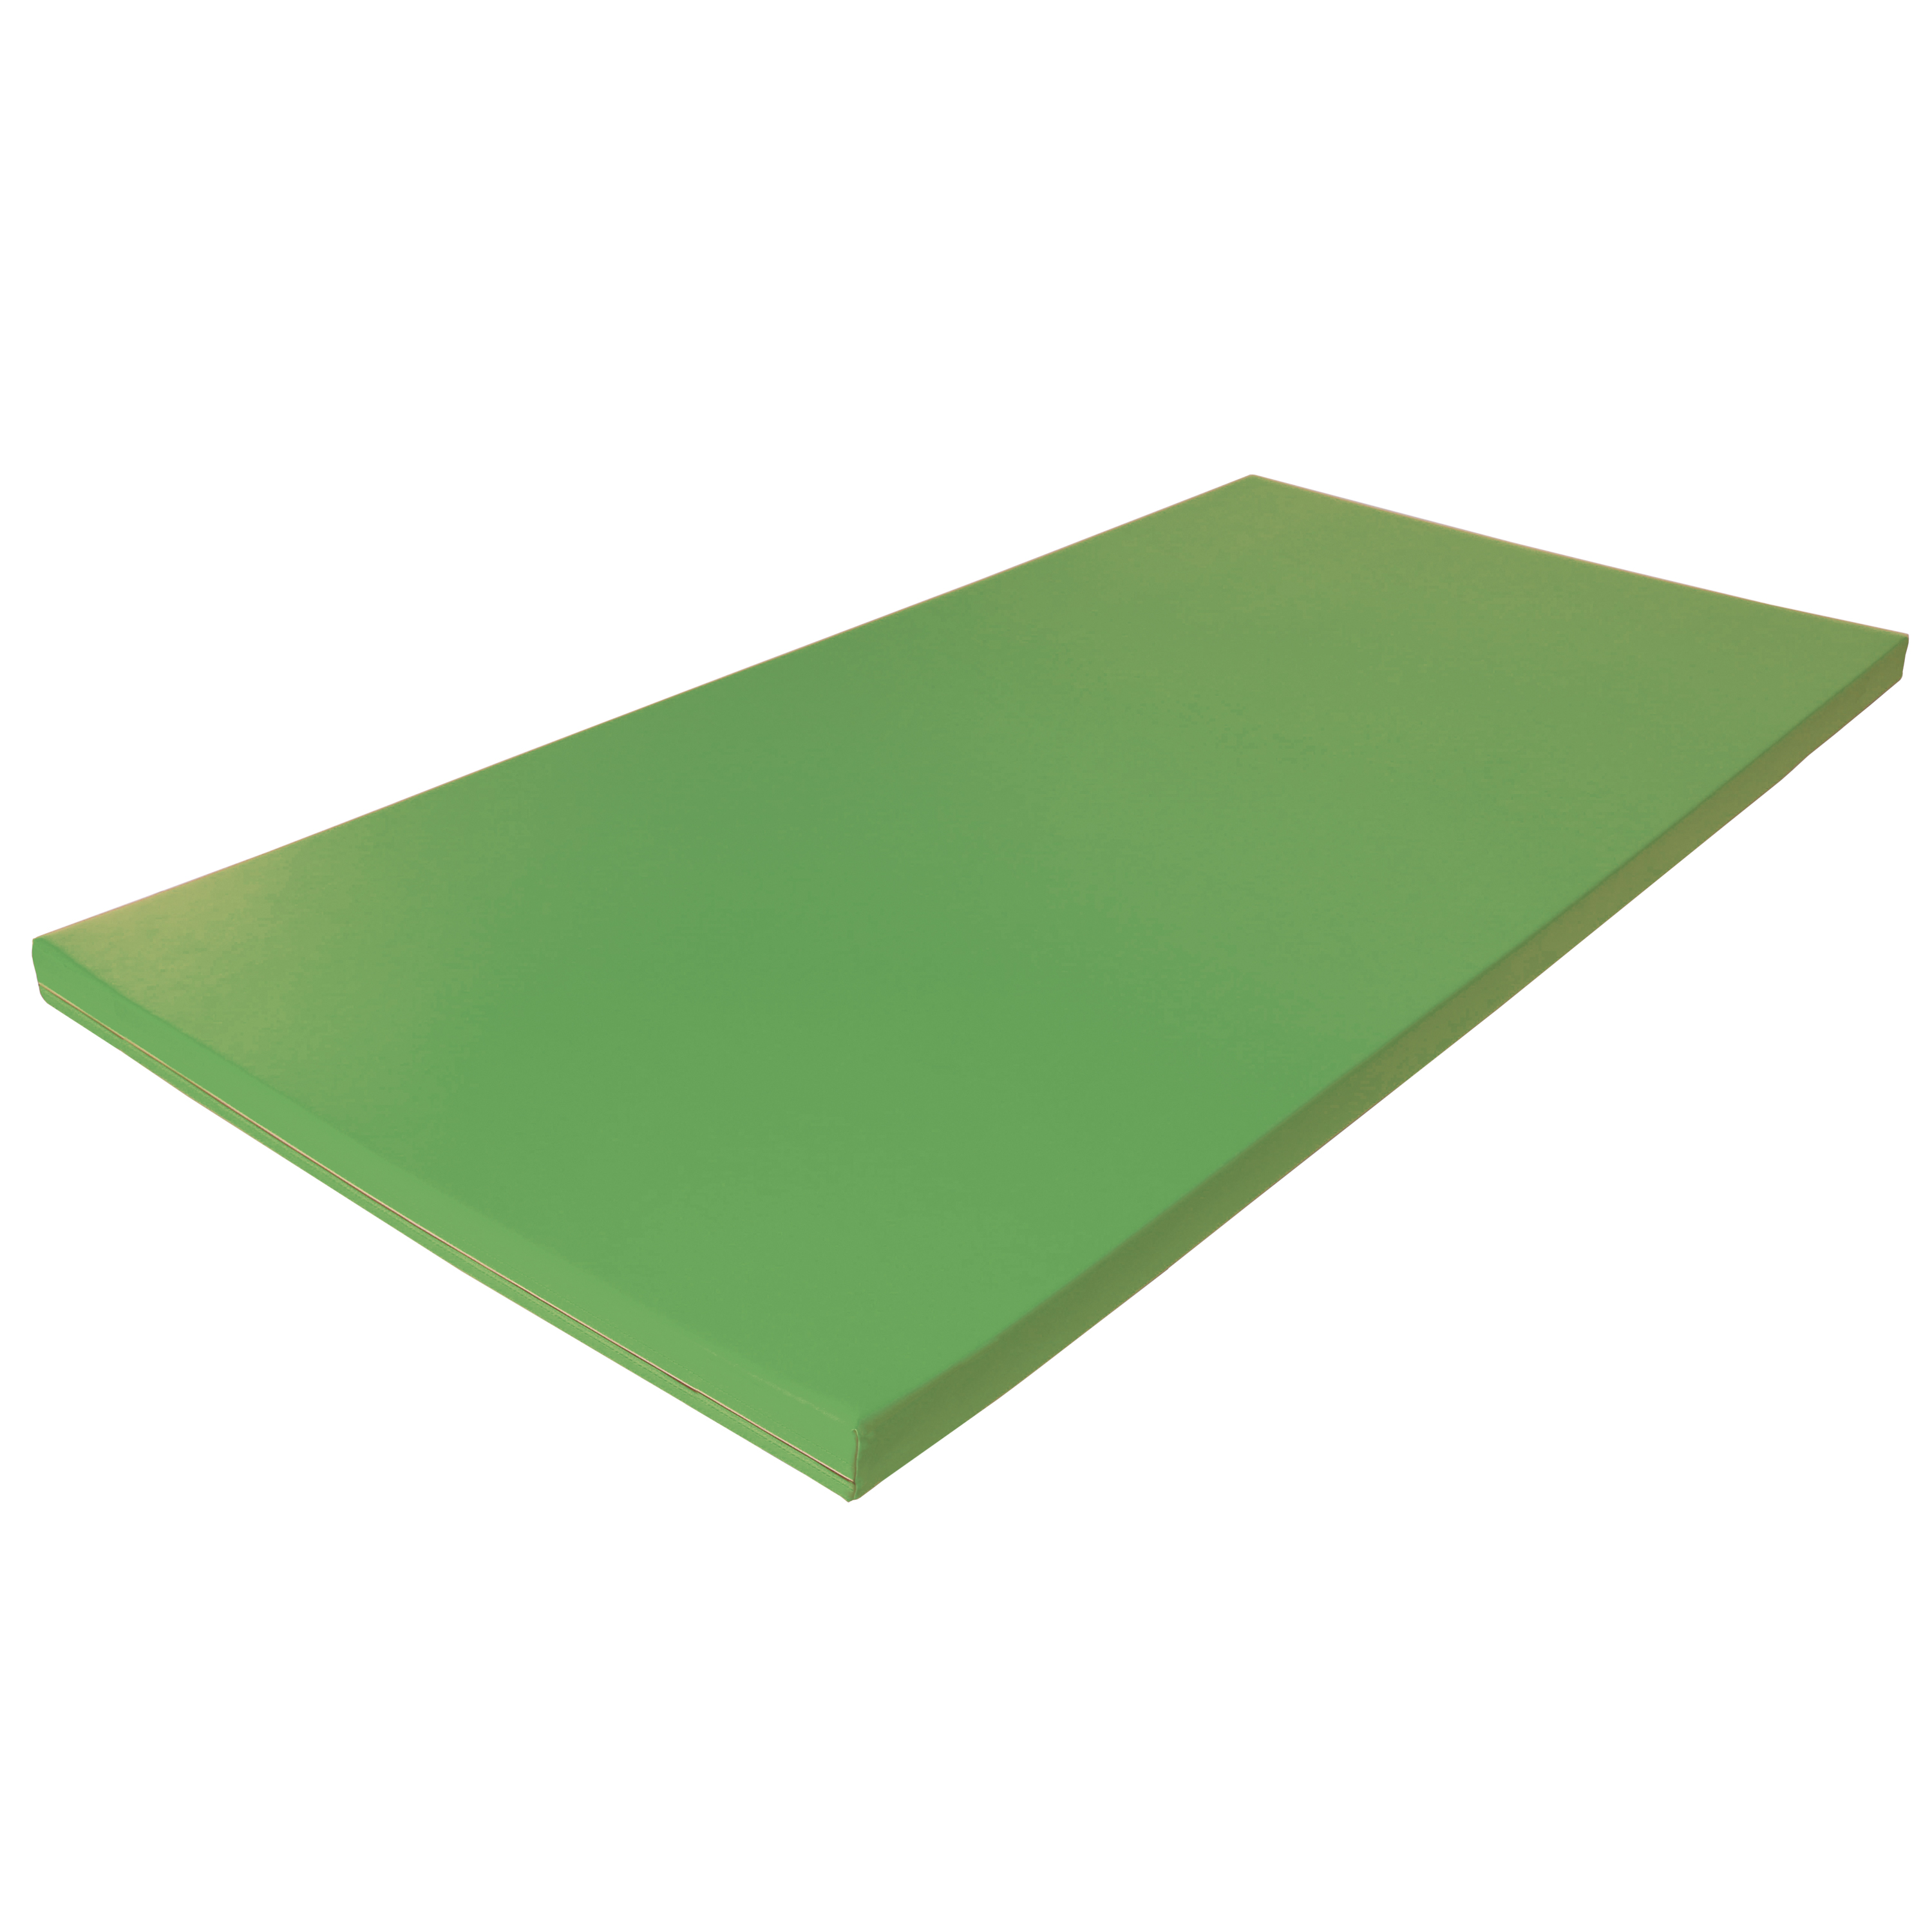 Fallschutzmatte Superleicht 'hellgrün', 200 x 100 cm